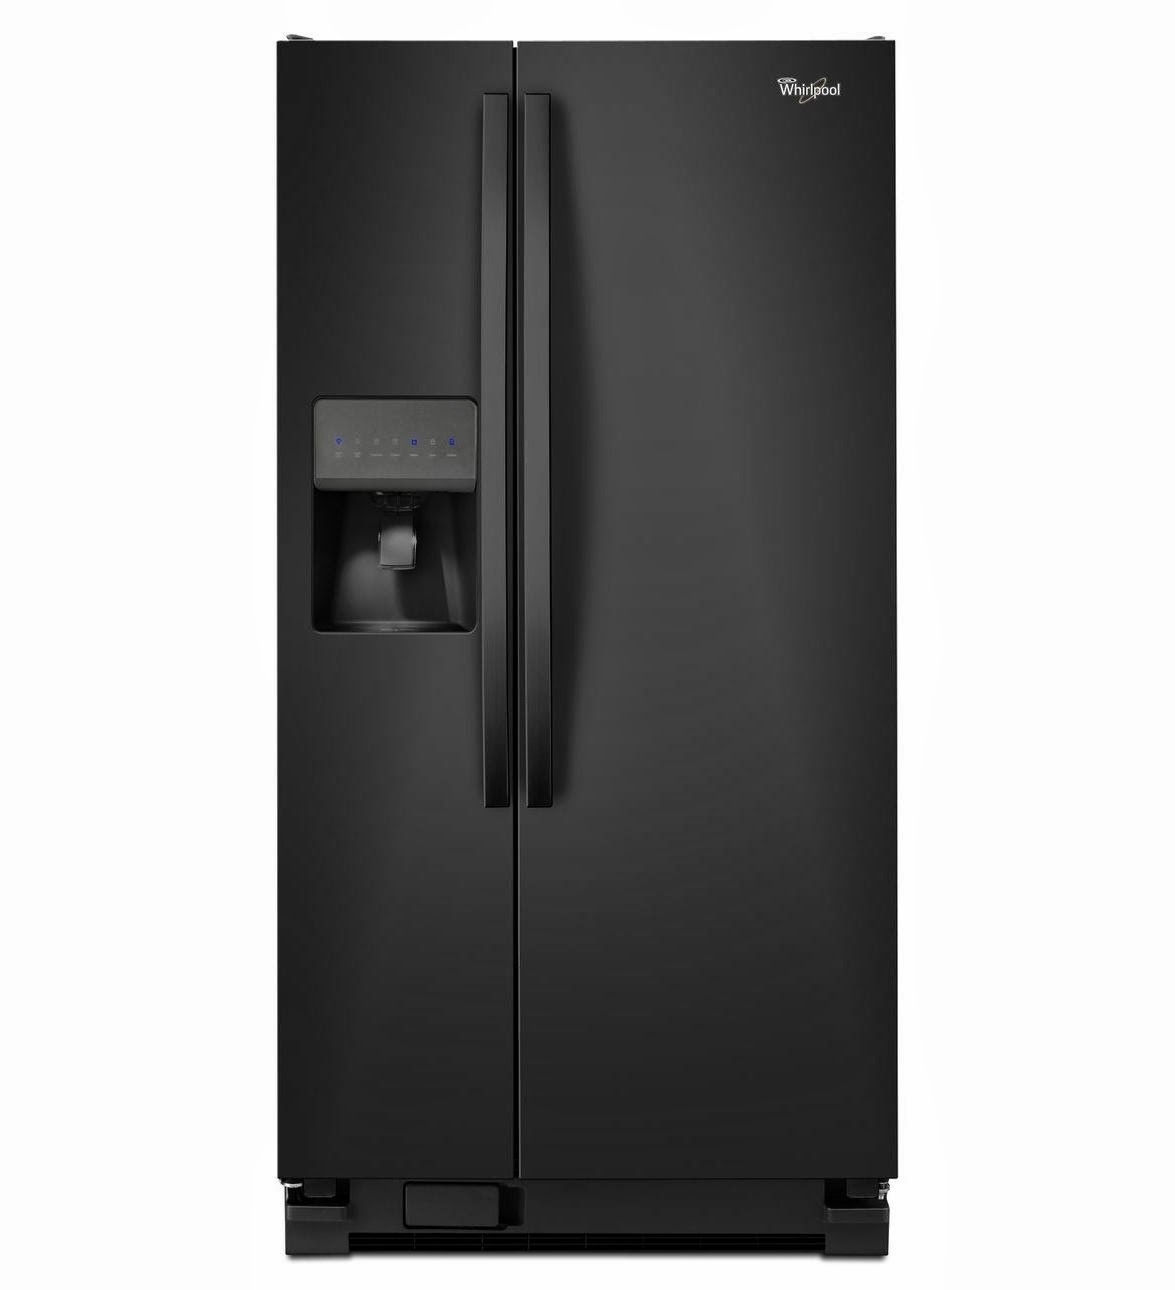 whirlpool-refrigerator-brand-wrs322fdab-black-whirlpool-refrigerator